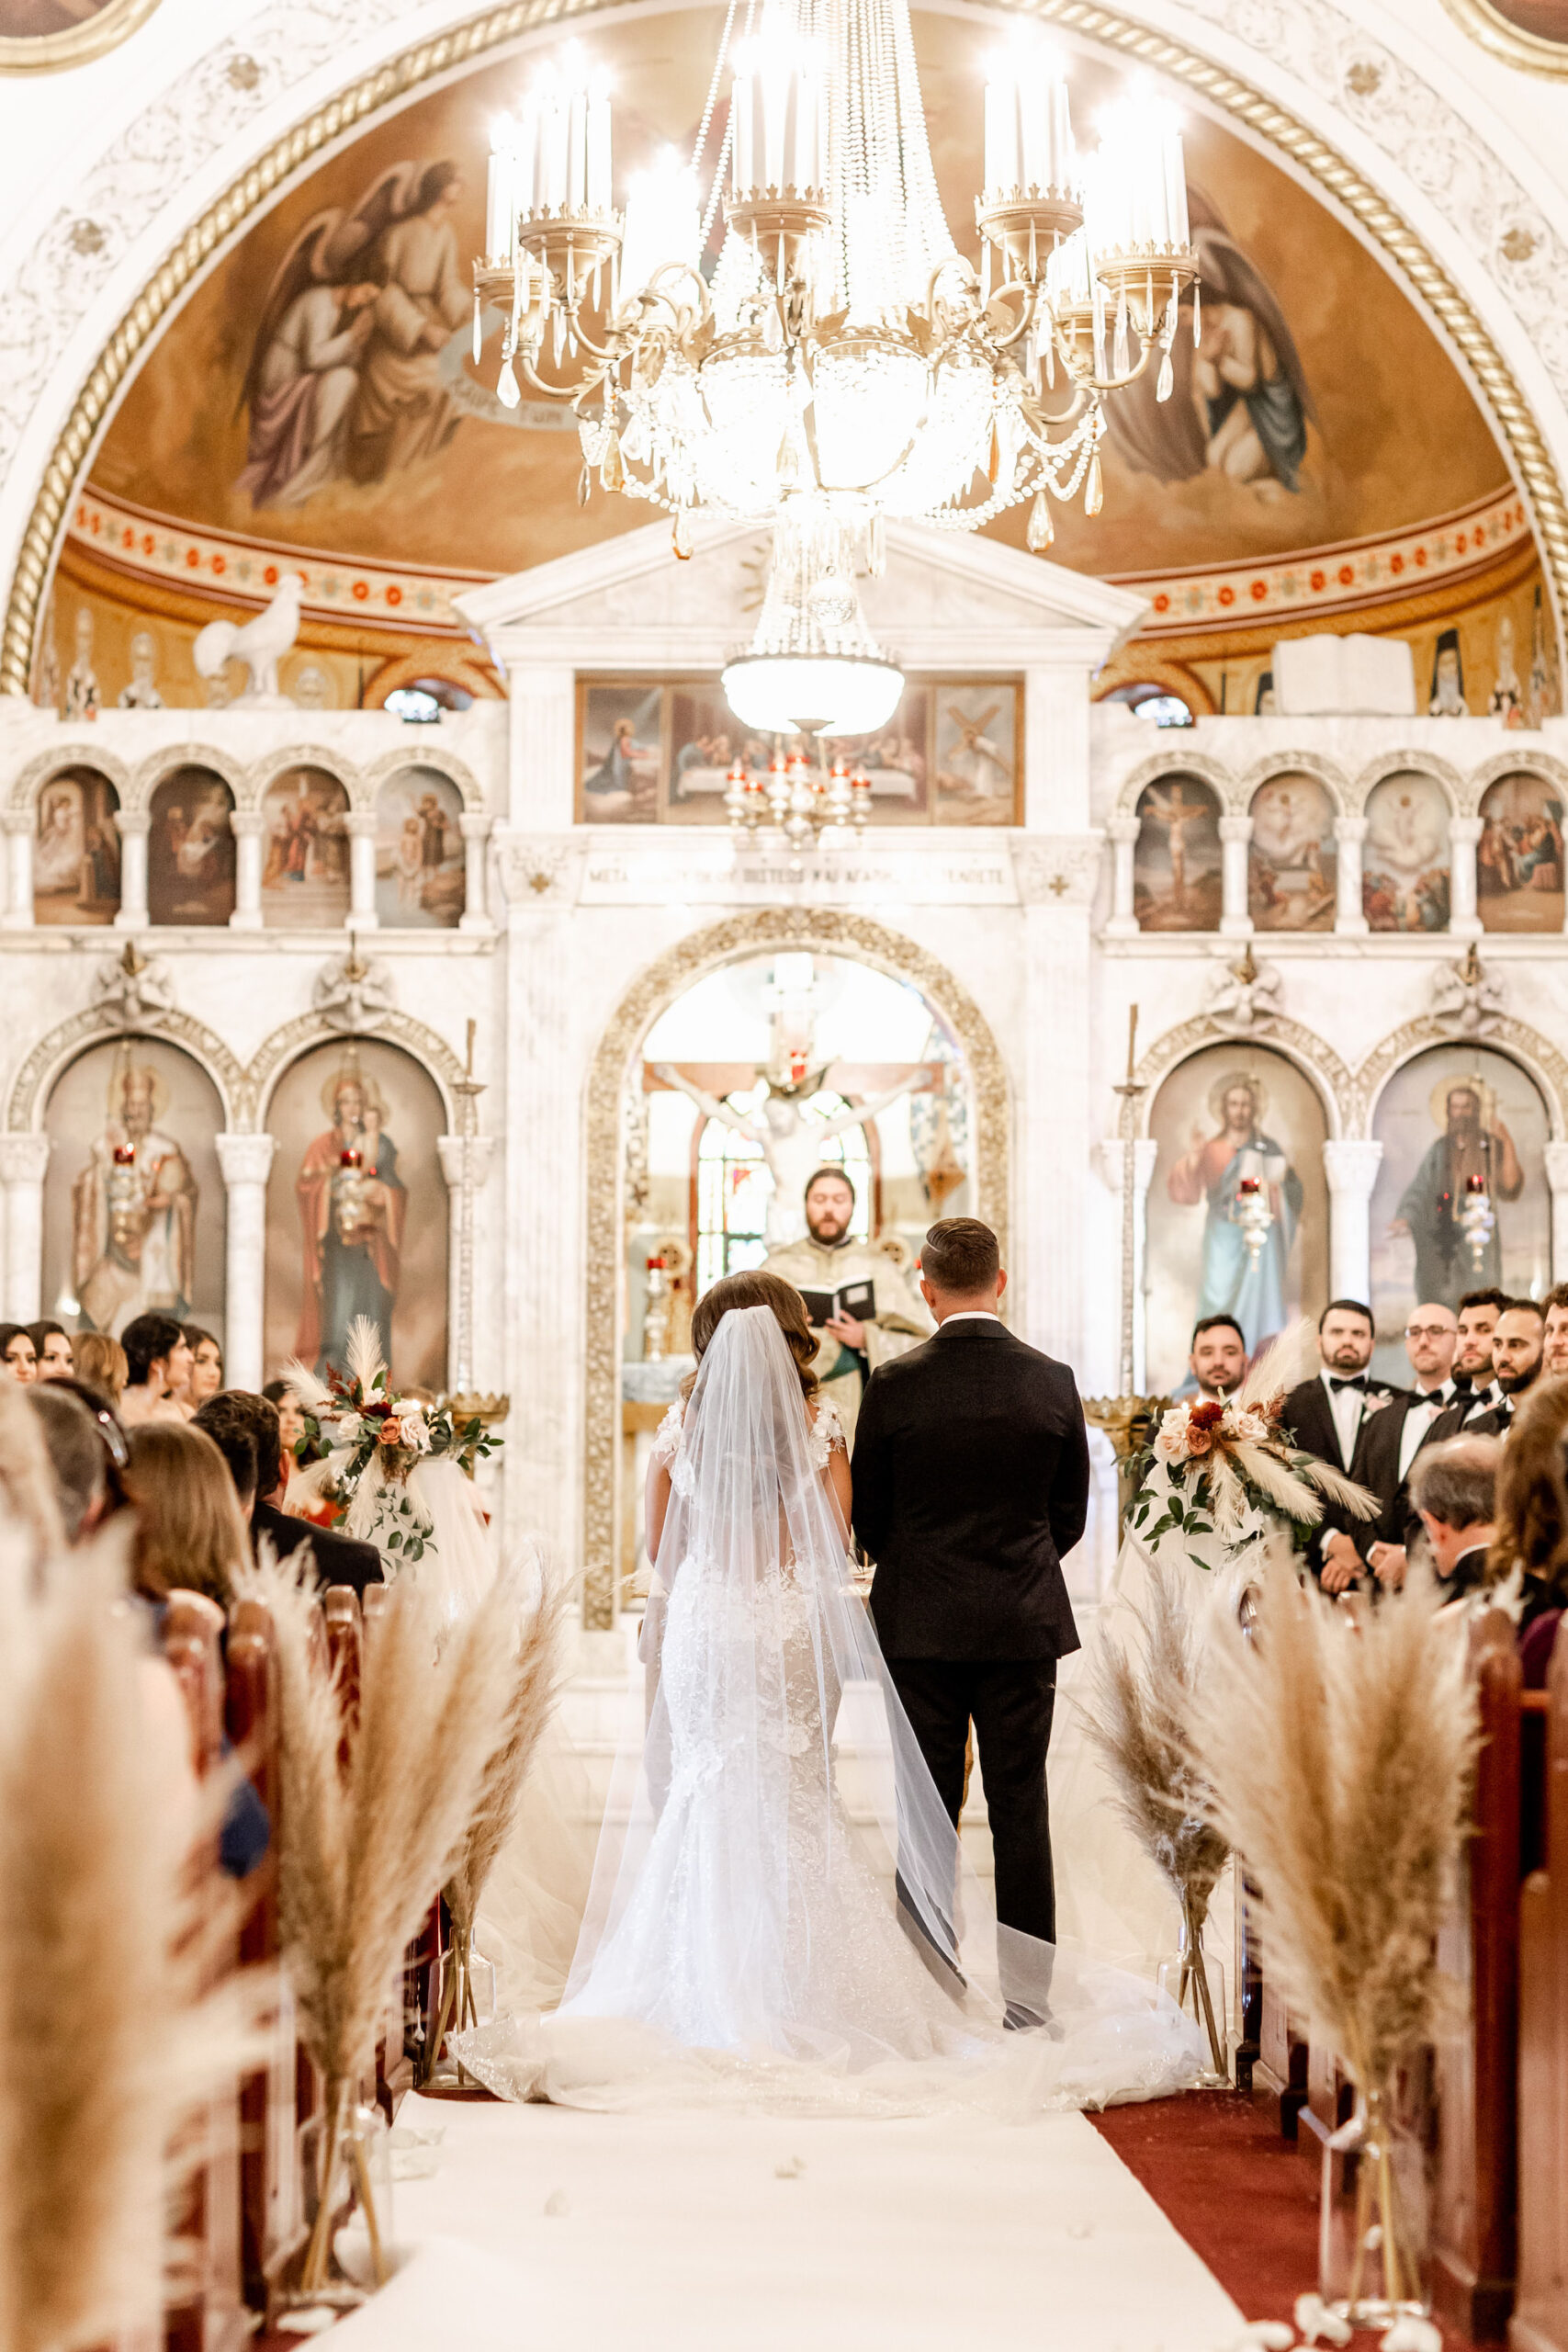 Traditional Greek Church Wedding Ceremony at Tarpon Springs Wedding Venue St. Nicholas Greek Orthodox Cathedral